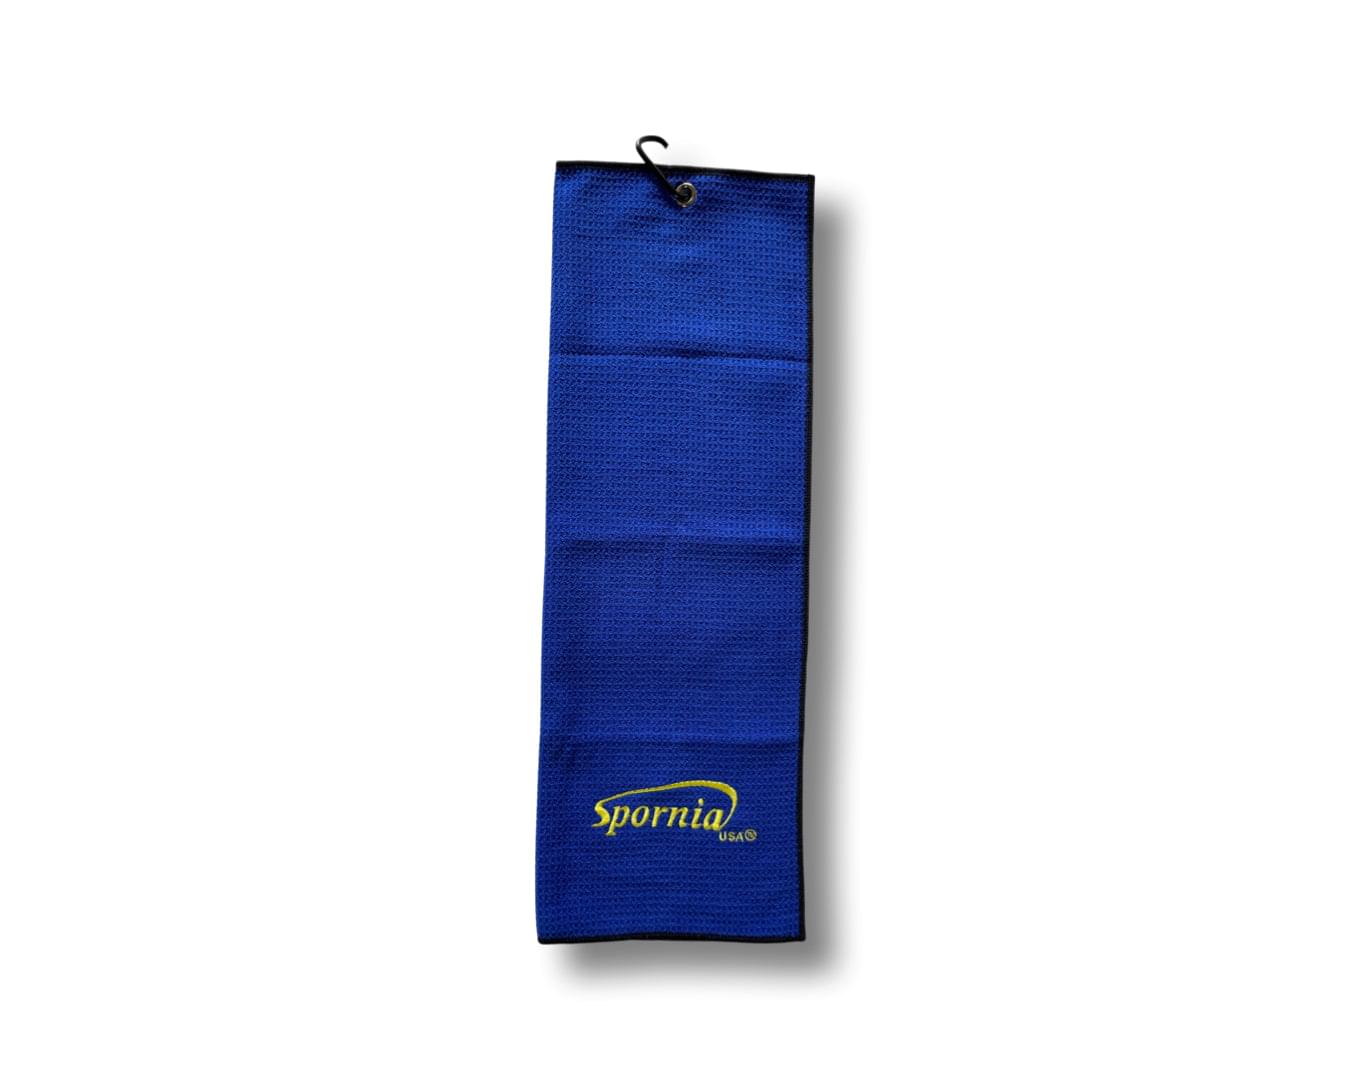 Spornia USA Waffle Towel - Blue